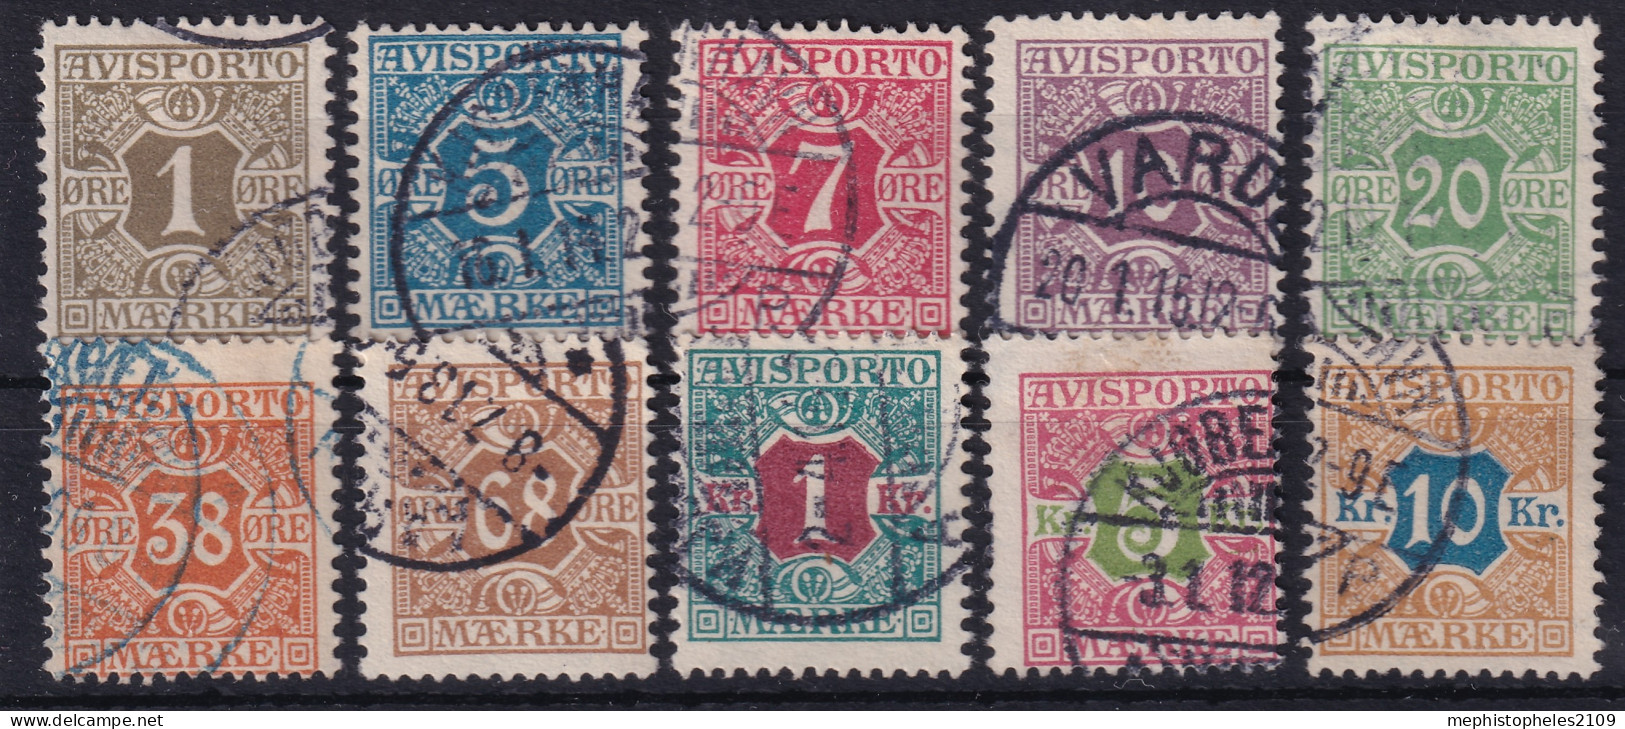 DENMARK 1907 - Canceled - Sc# P1-P10 - Newspaper Stamps - Complete Set! - Postage Due